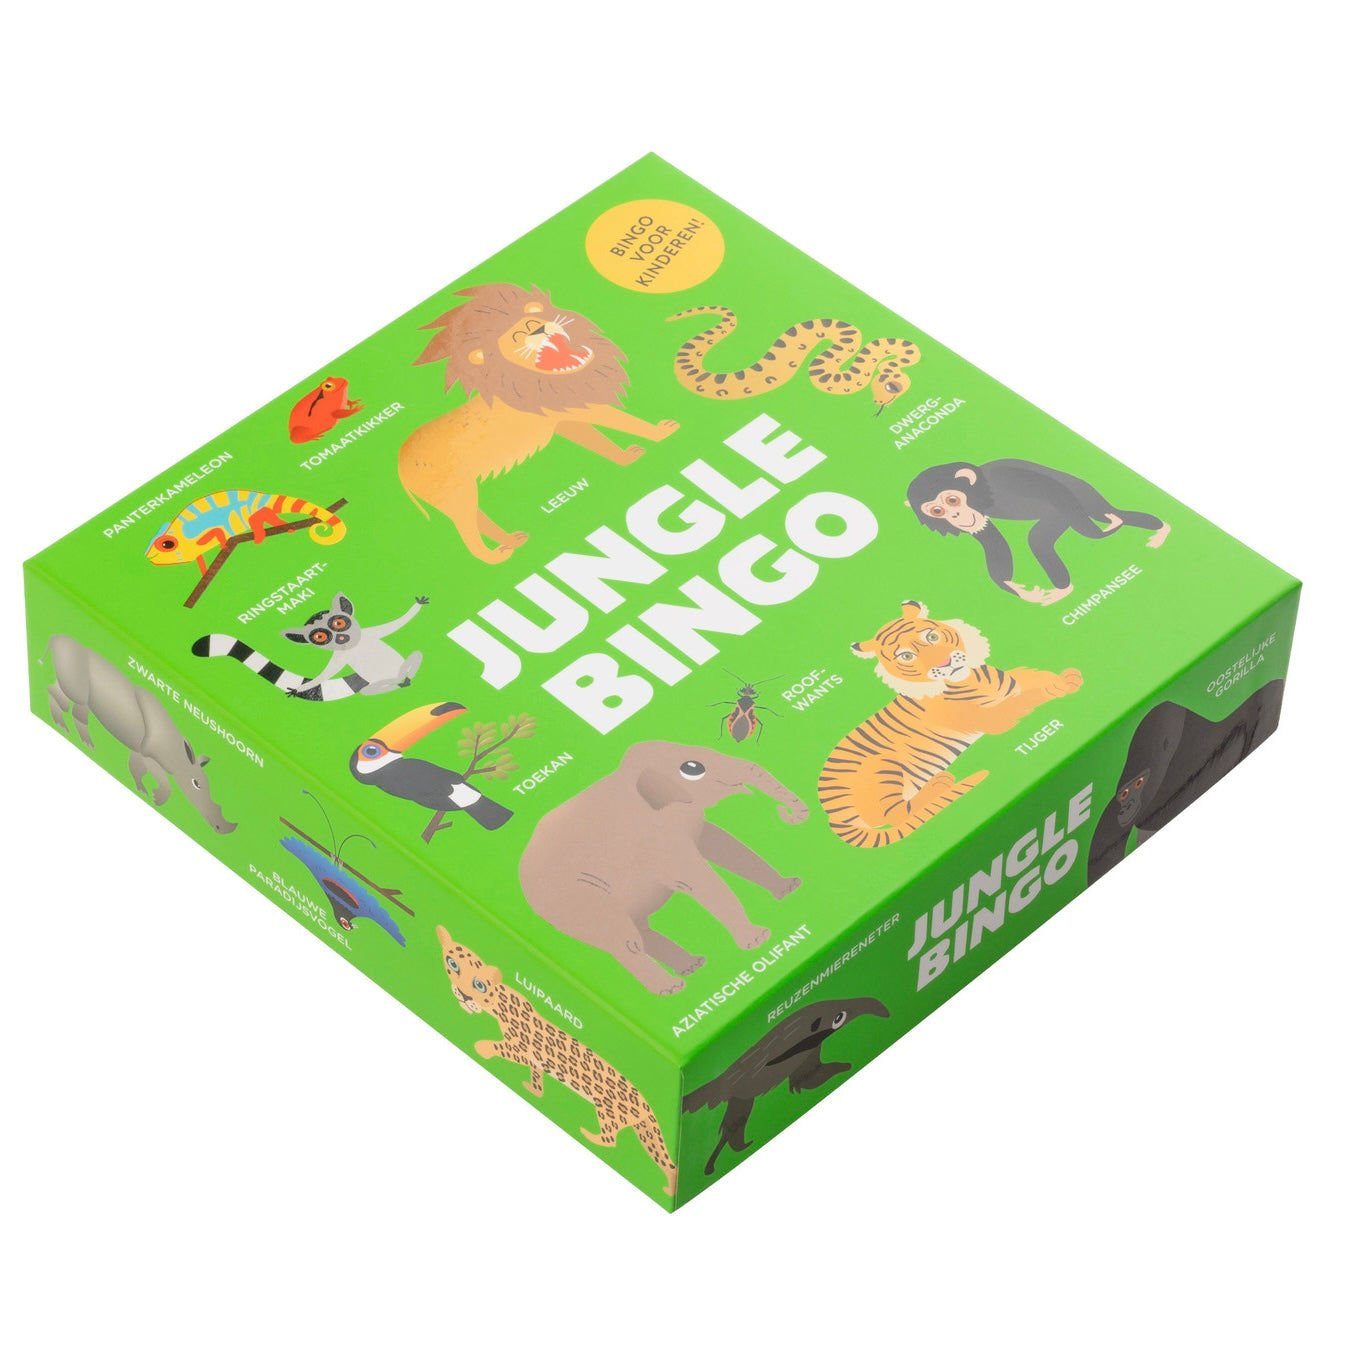 Jungle bingo (3+ years)